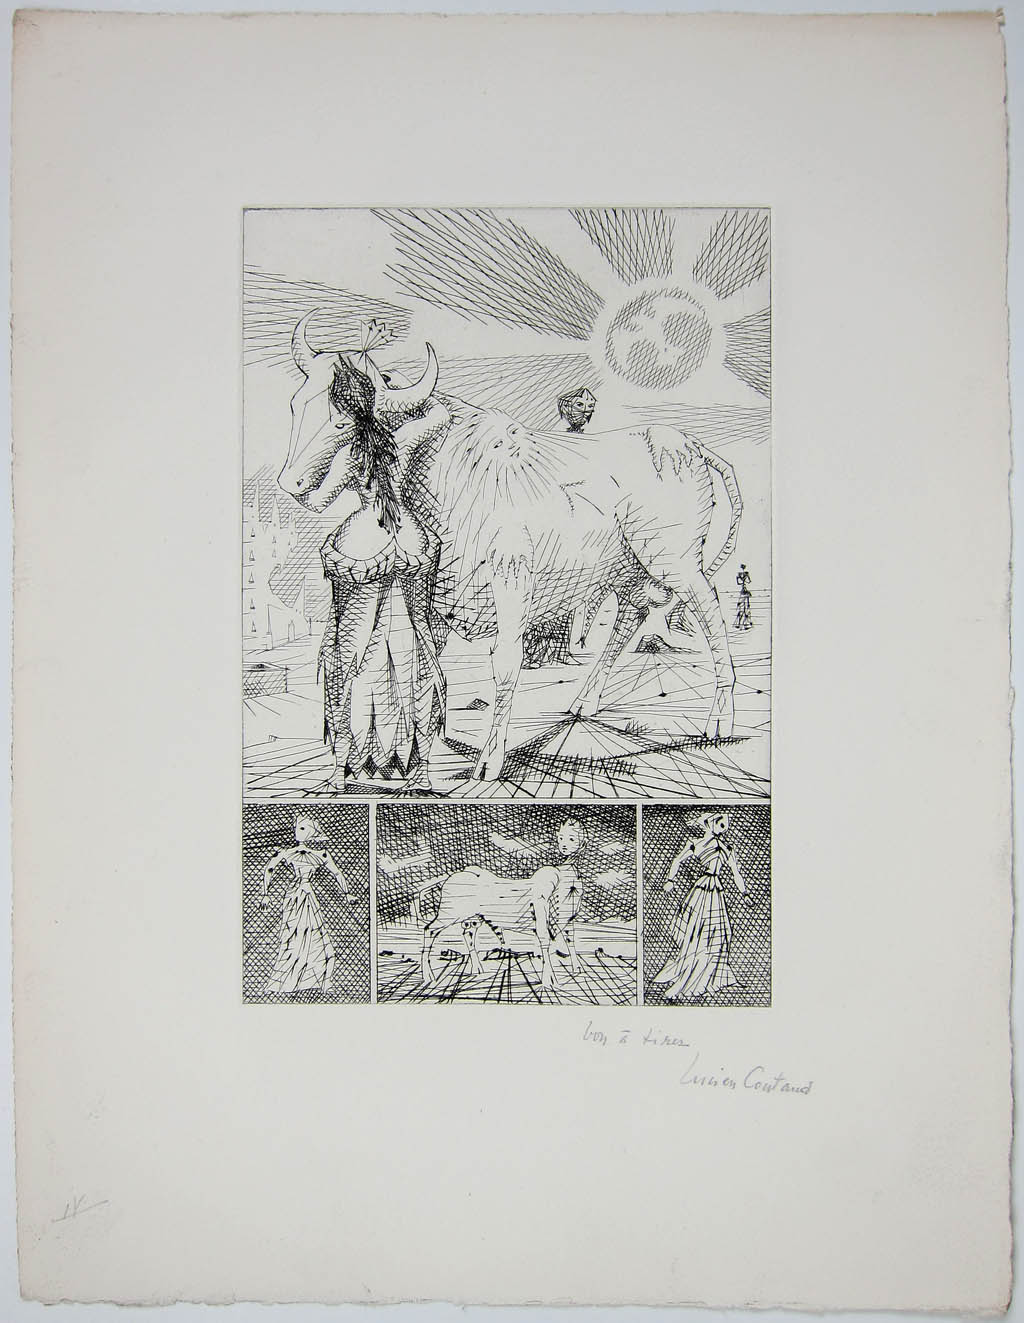 Lucien Coutaud - Le Taureau Blanc (Plate IV) - 1956 etching